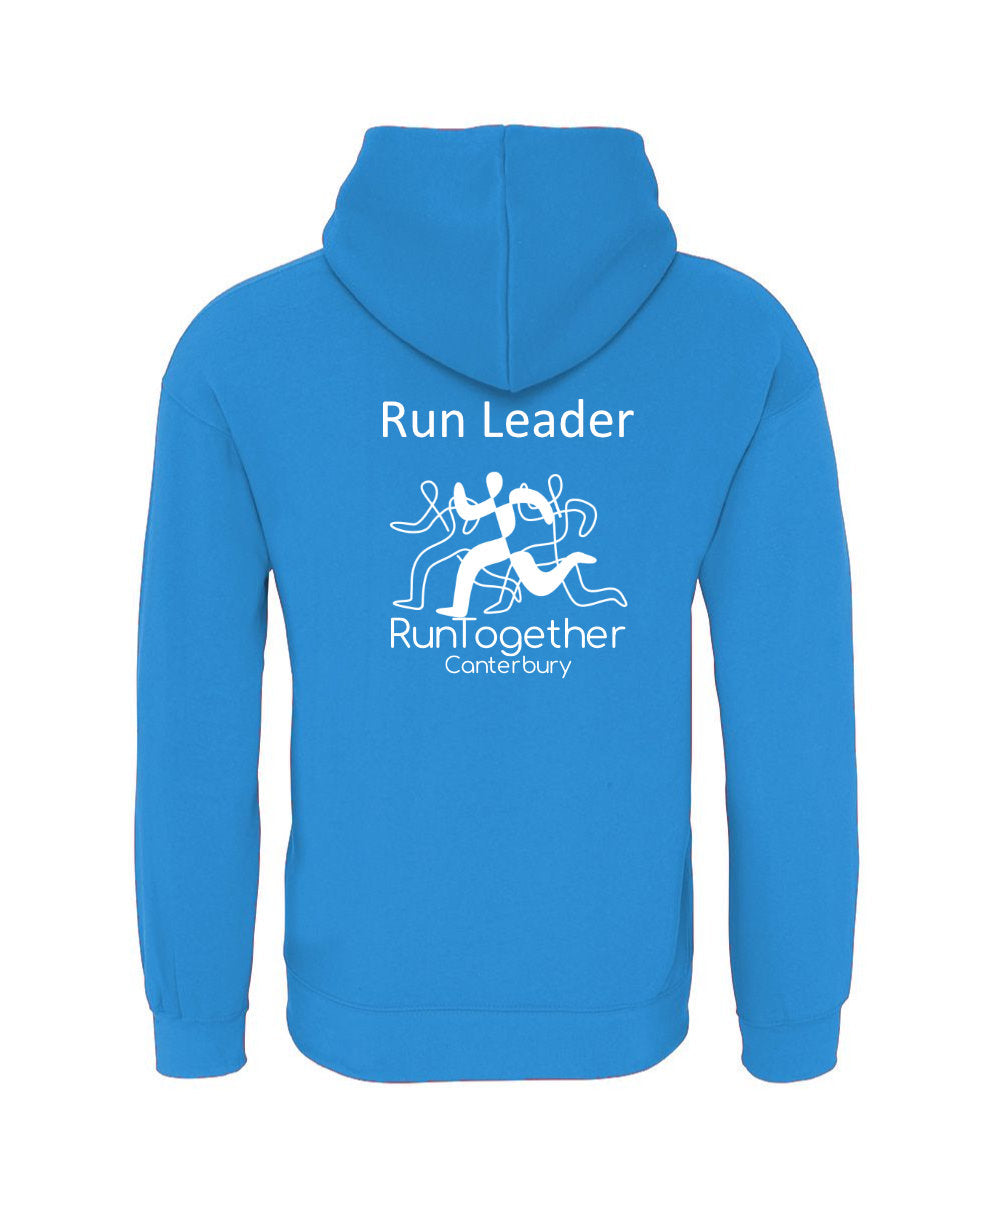 RunTogether Canterbury Hoodies- Run Leader